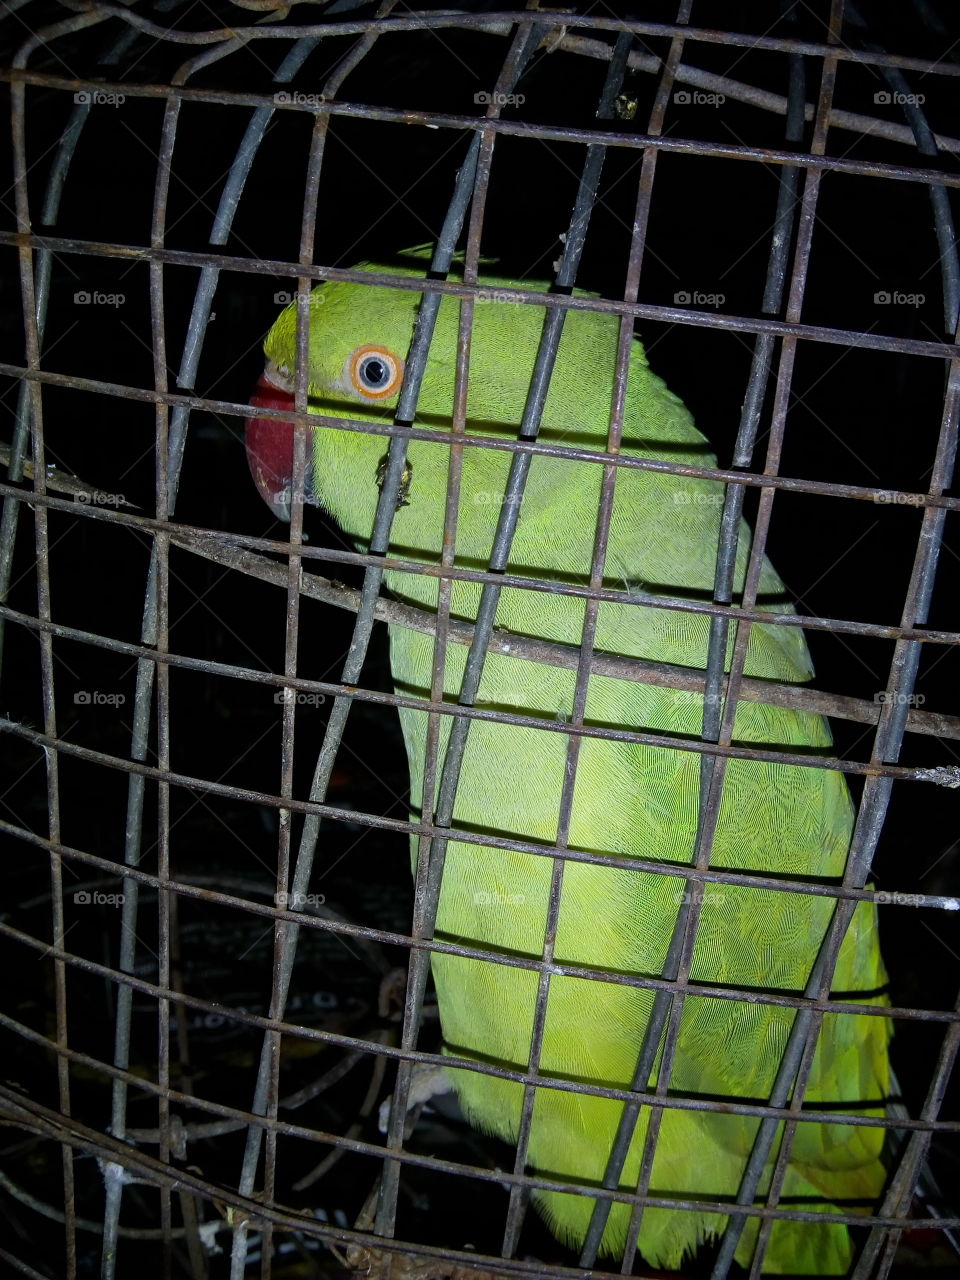 My sweet parrot